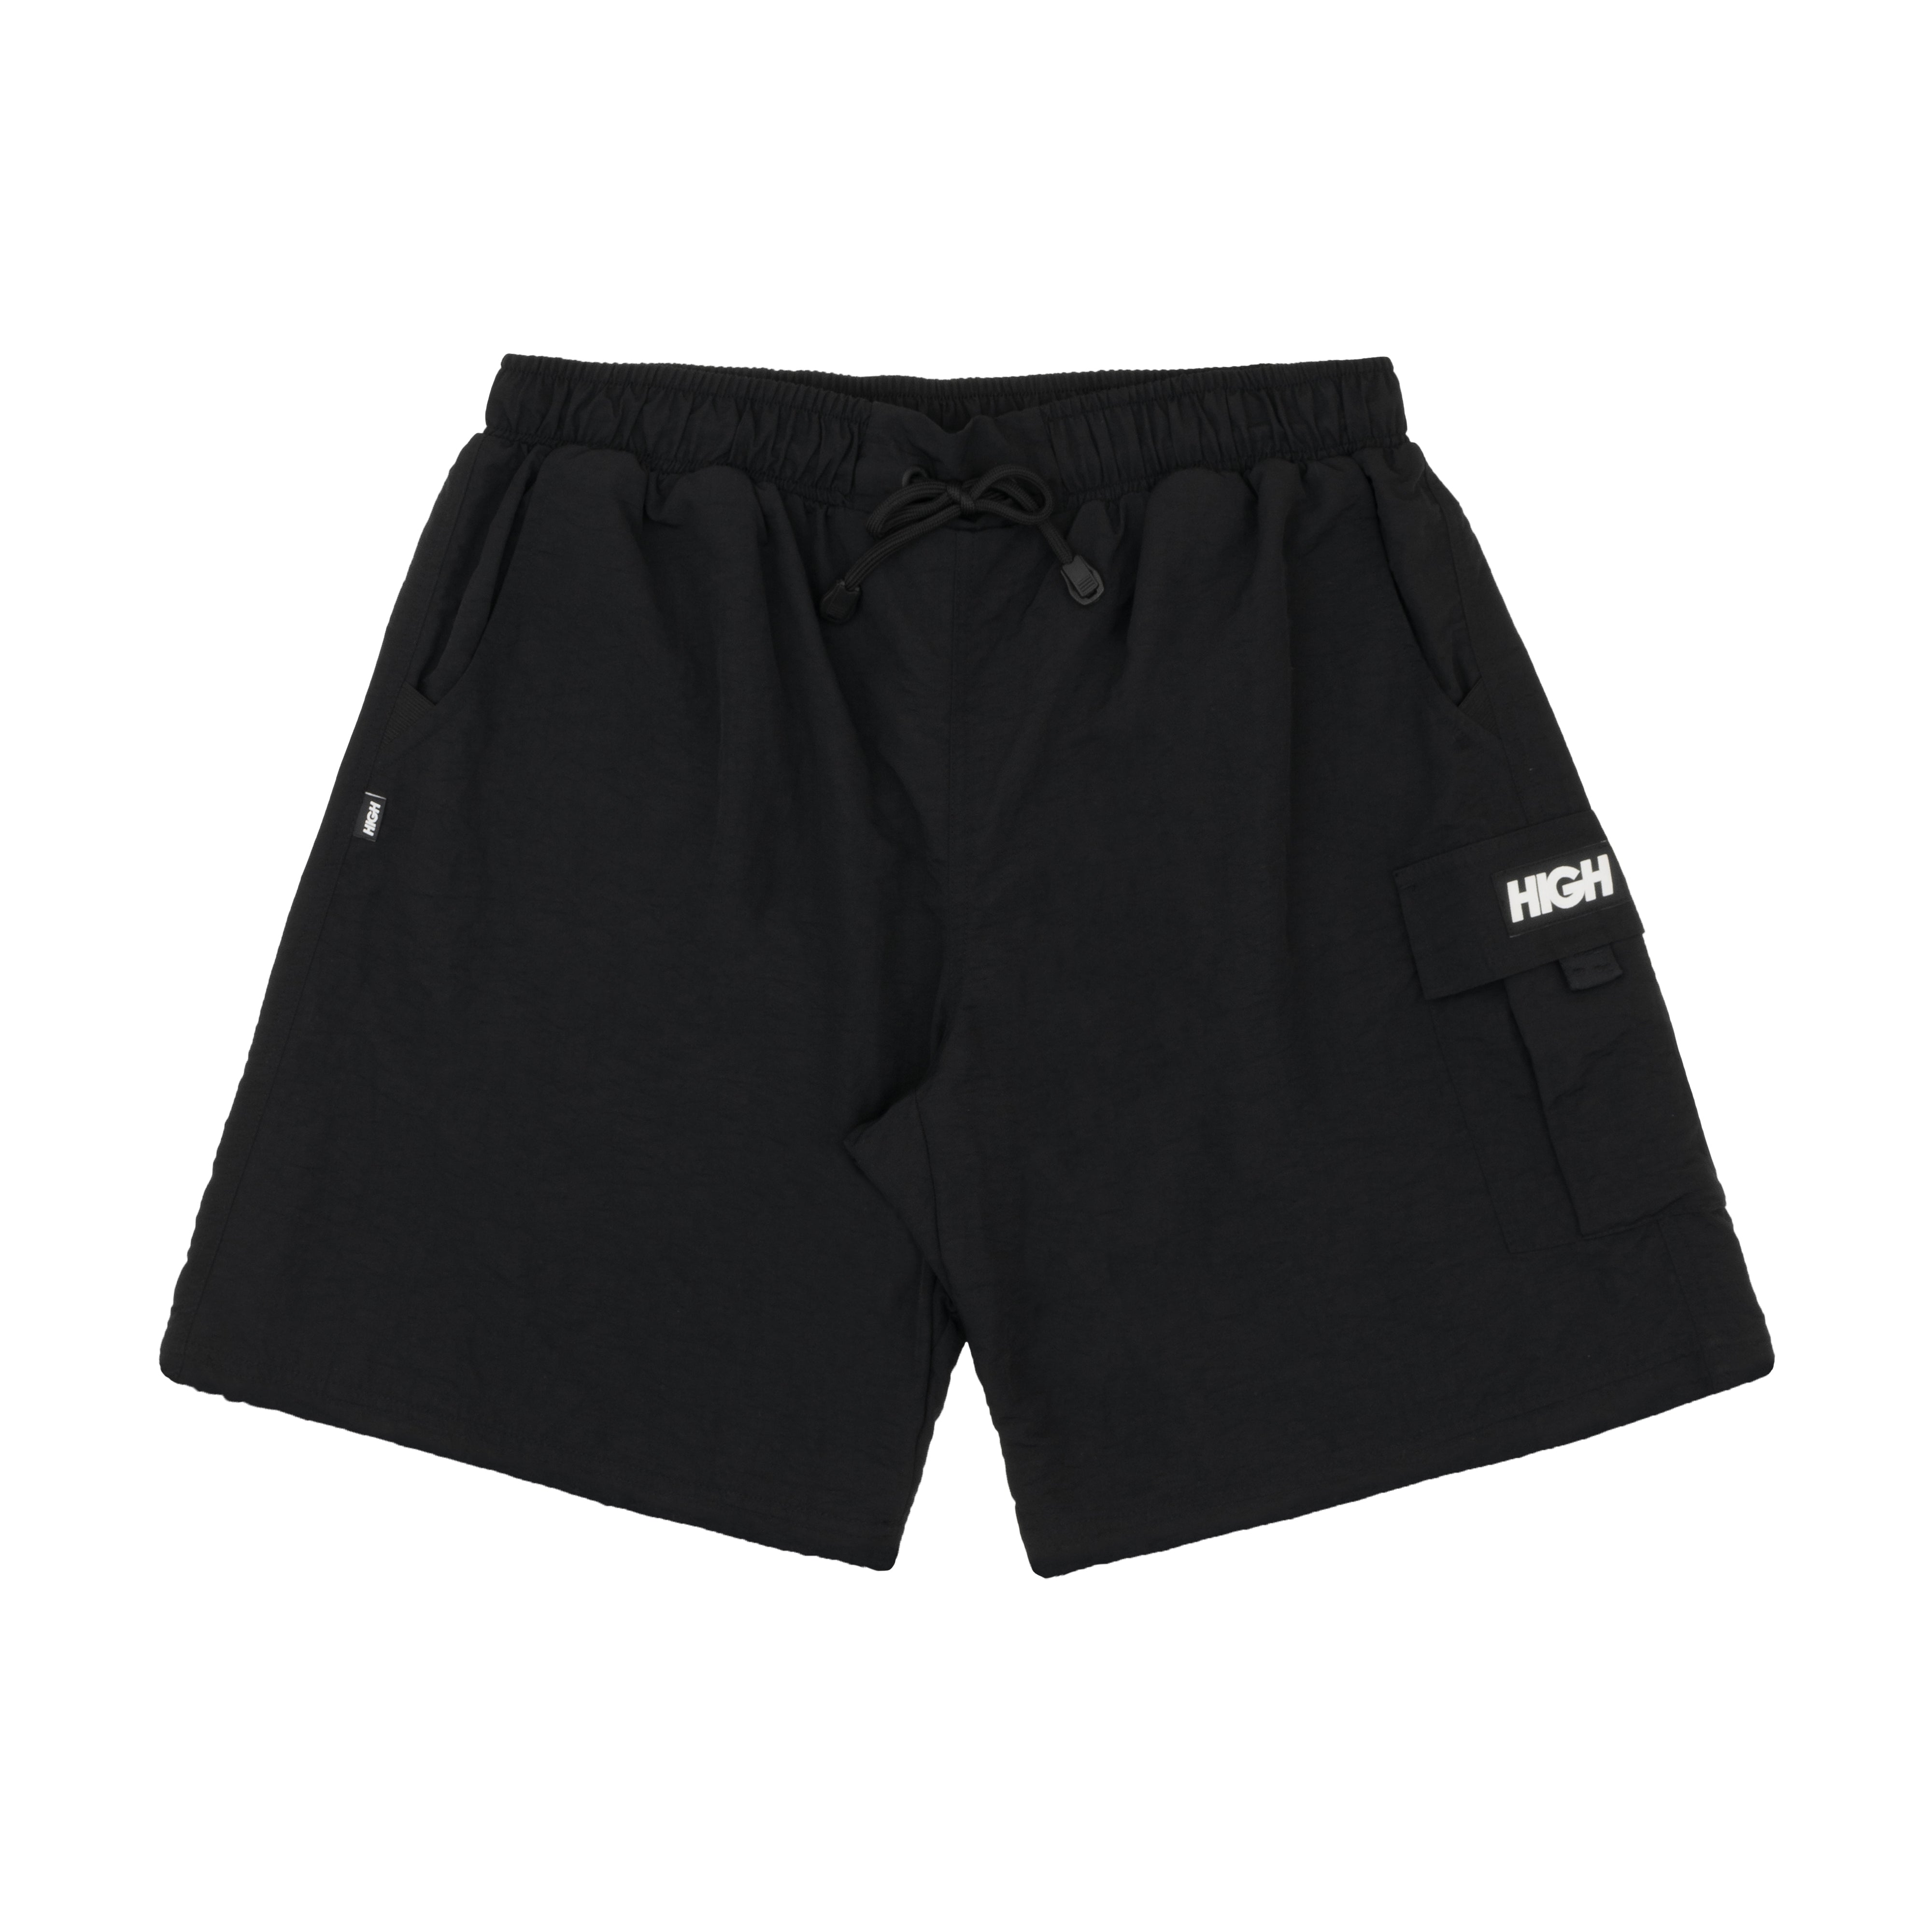 HIGH - Cargo Shorts Legit Black